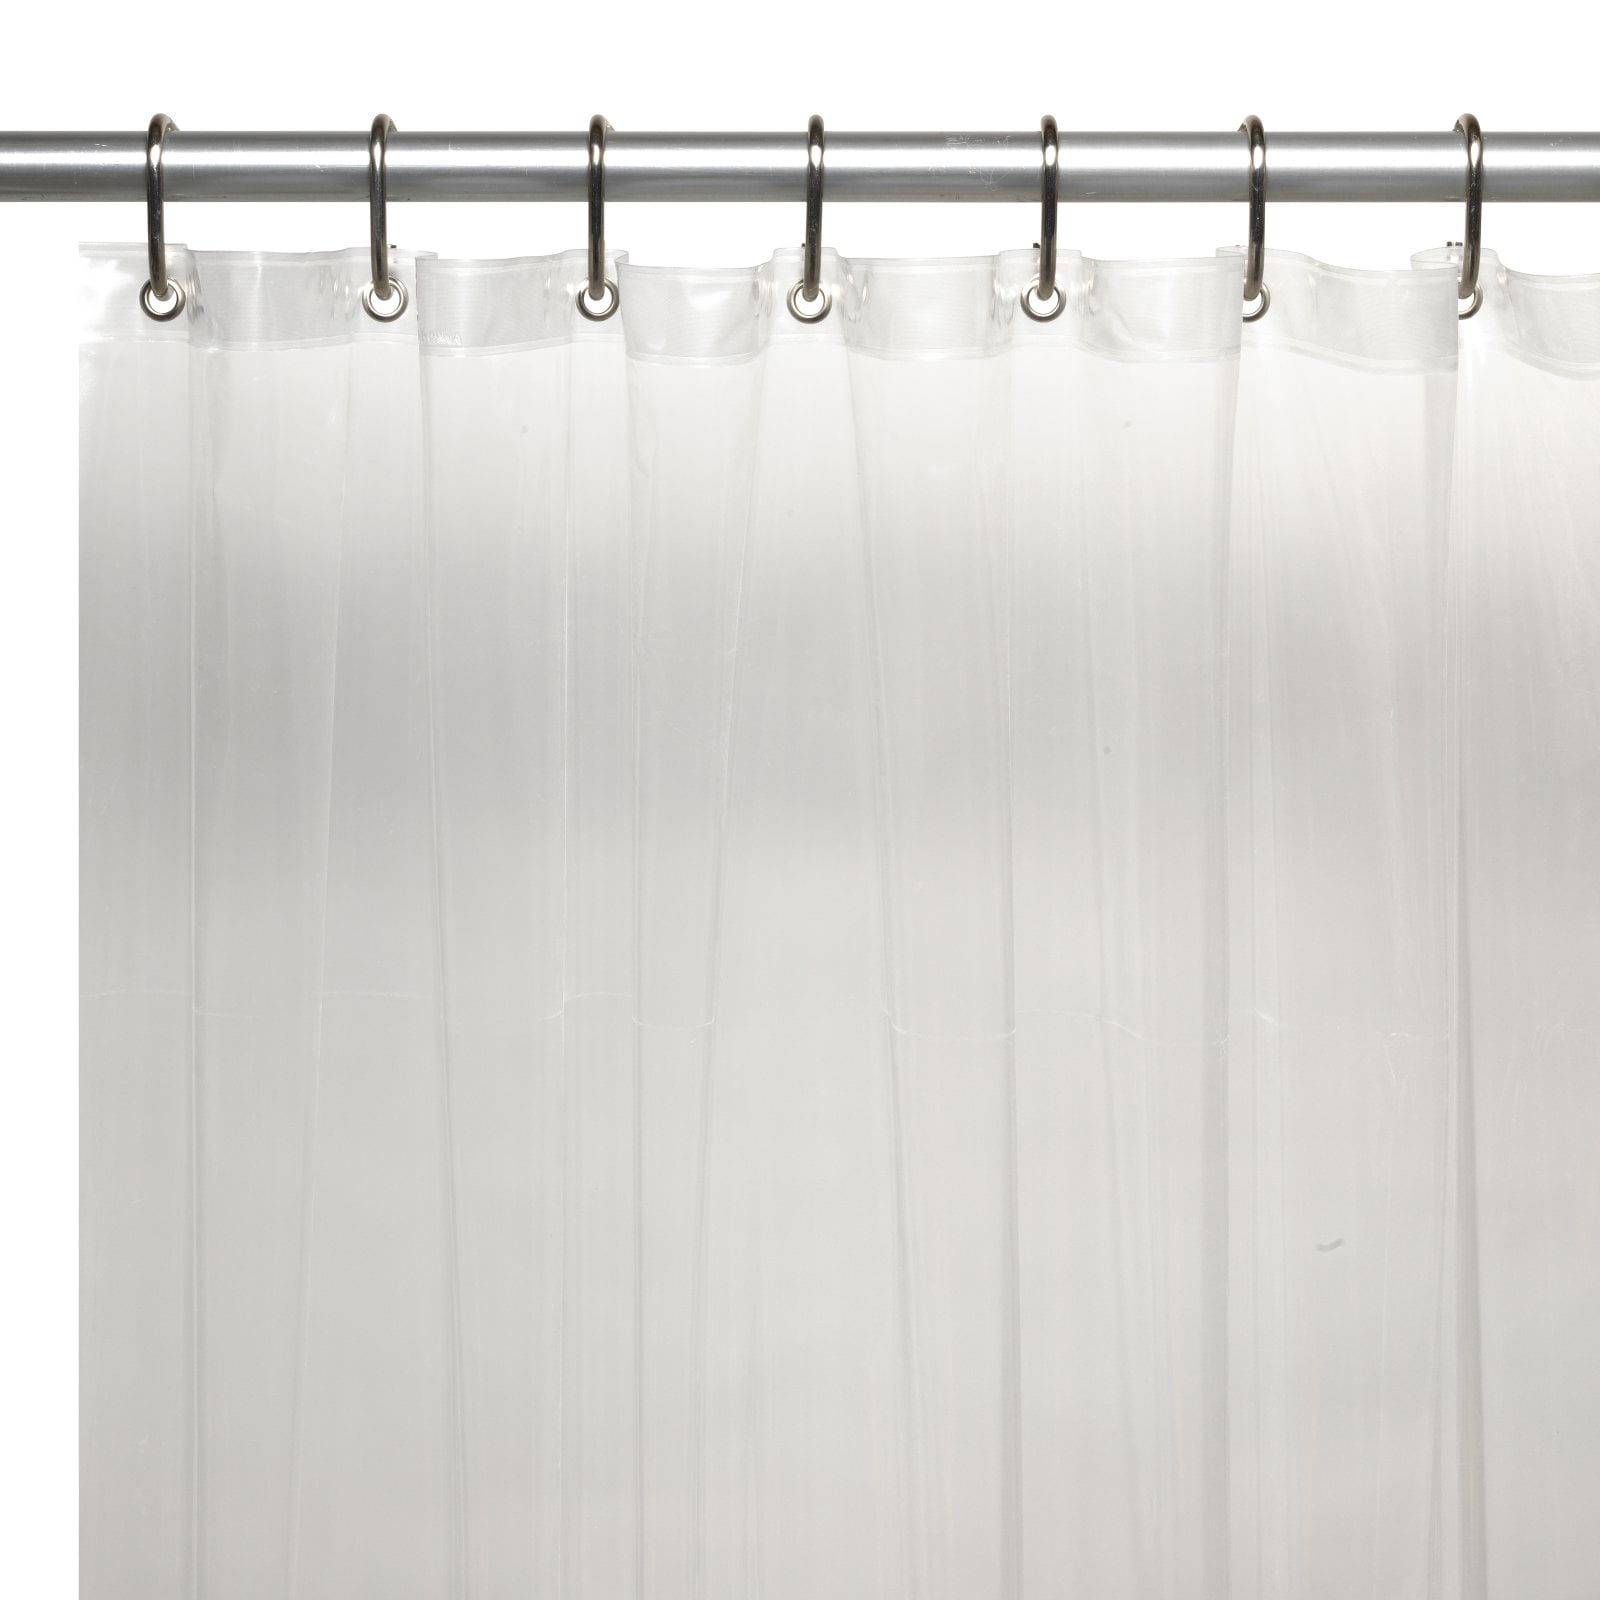 10 Gauge Vinyl Shower Curtain Liner, Long Shower Curtain Liner 72 X 78